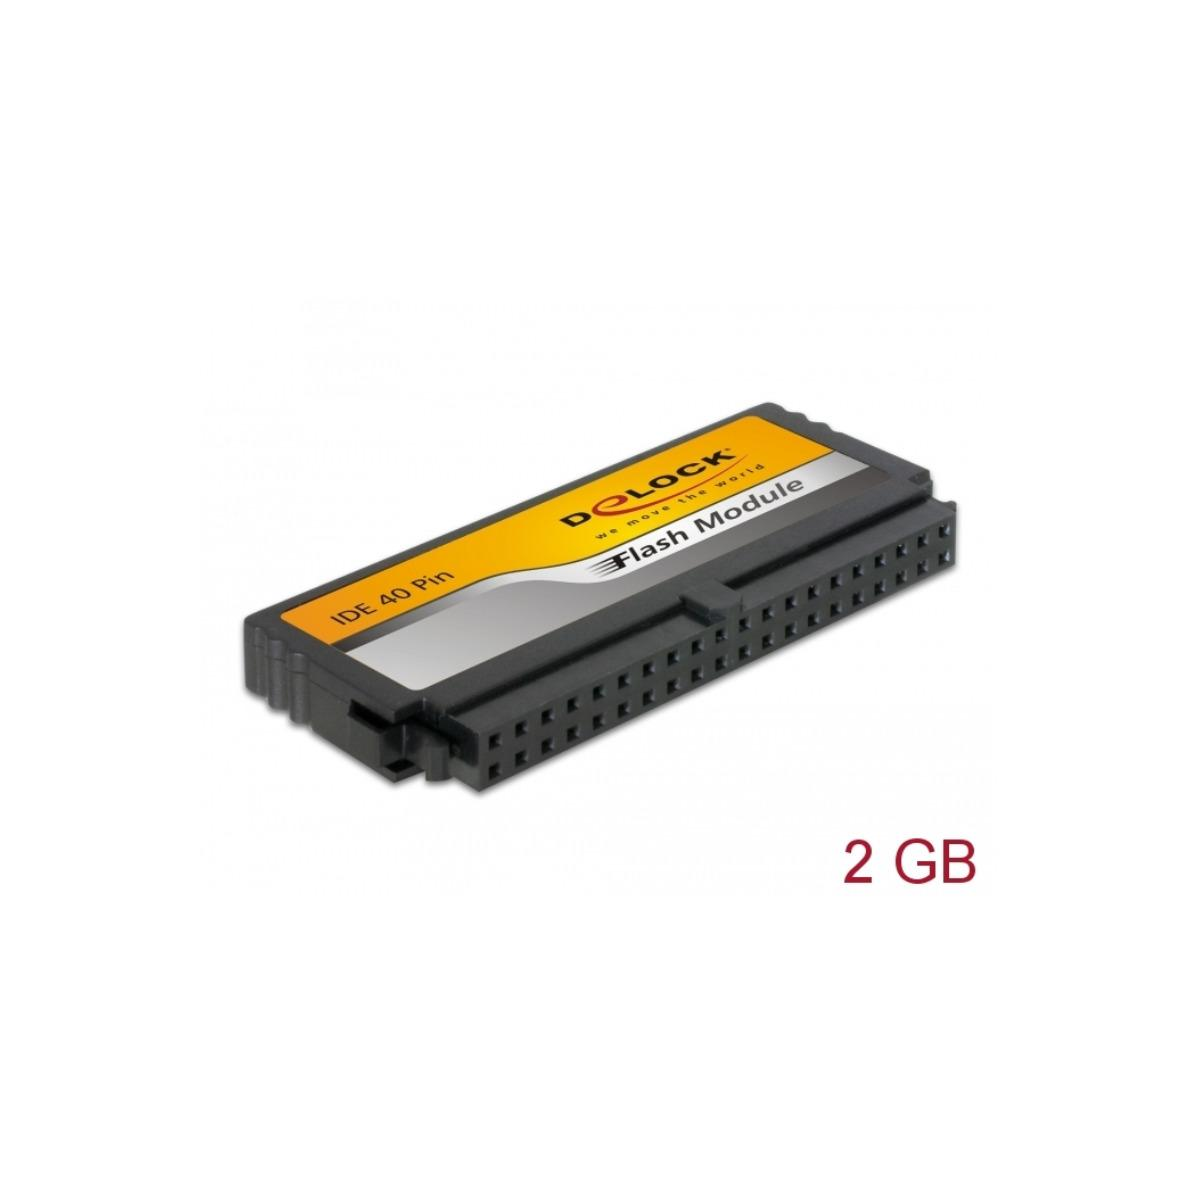 DELOCK MB/s MLC 54145, GB, Flash Flash 20 Modul, 2